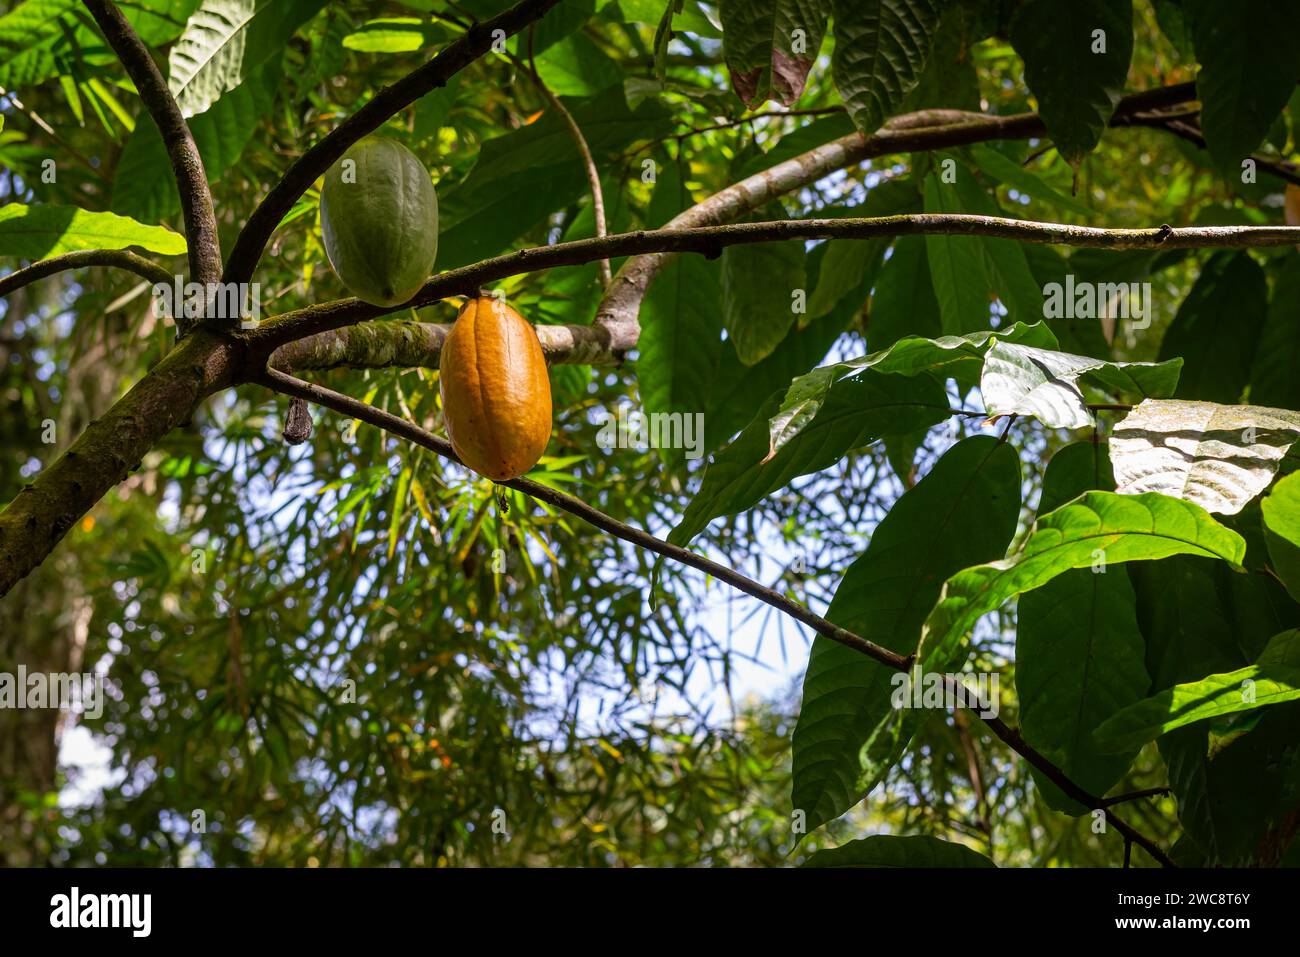 Cocoa pods on the tree ripe organic tropical fruit Trinidad and Tobago local plantation Stock Photo